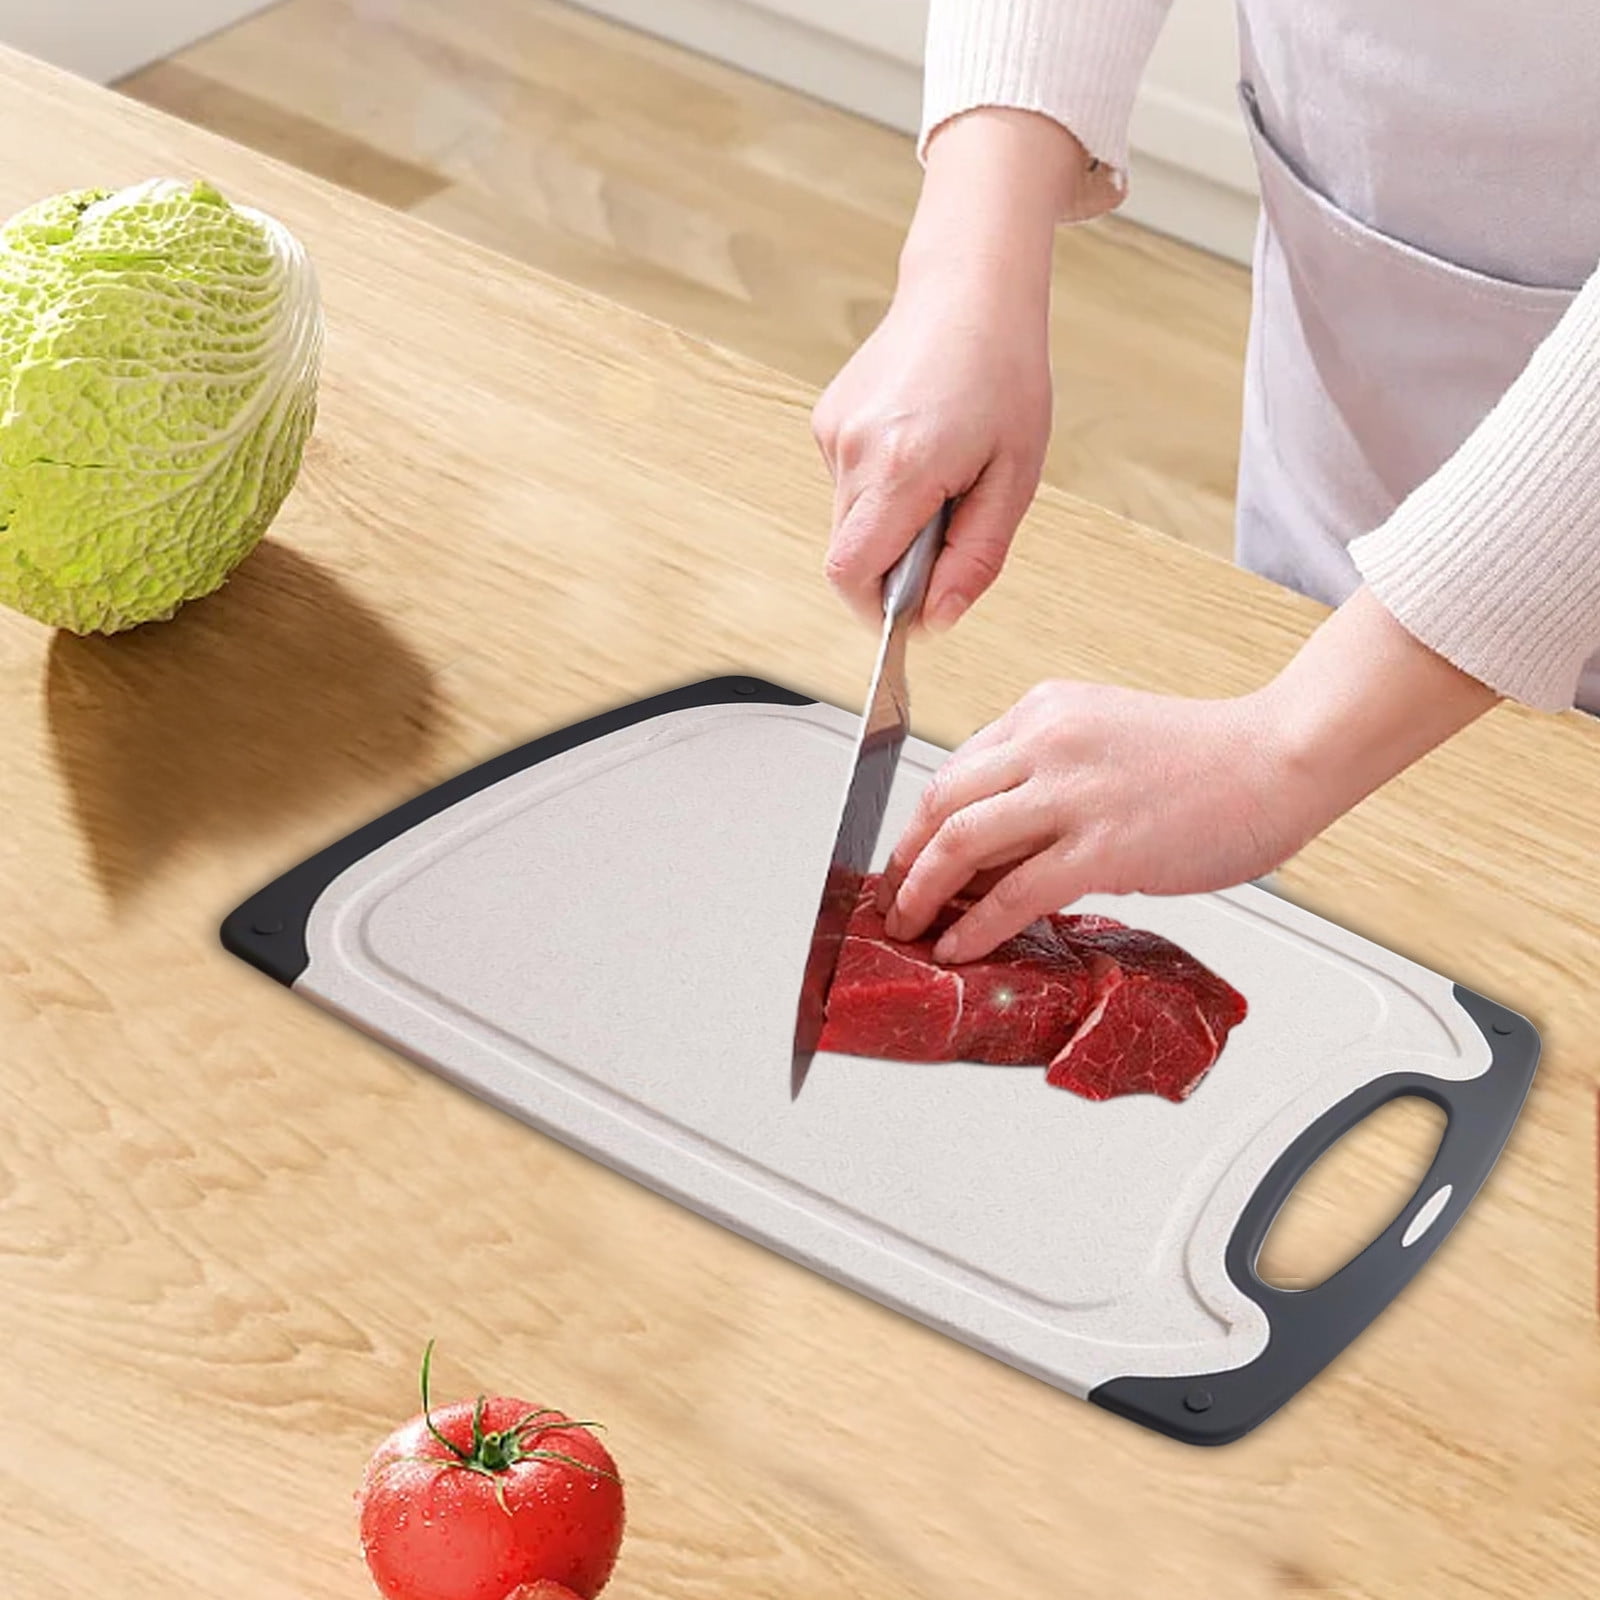 Cutting Board Juice Groove, Dishwasher Safe Cutting Board